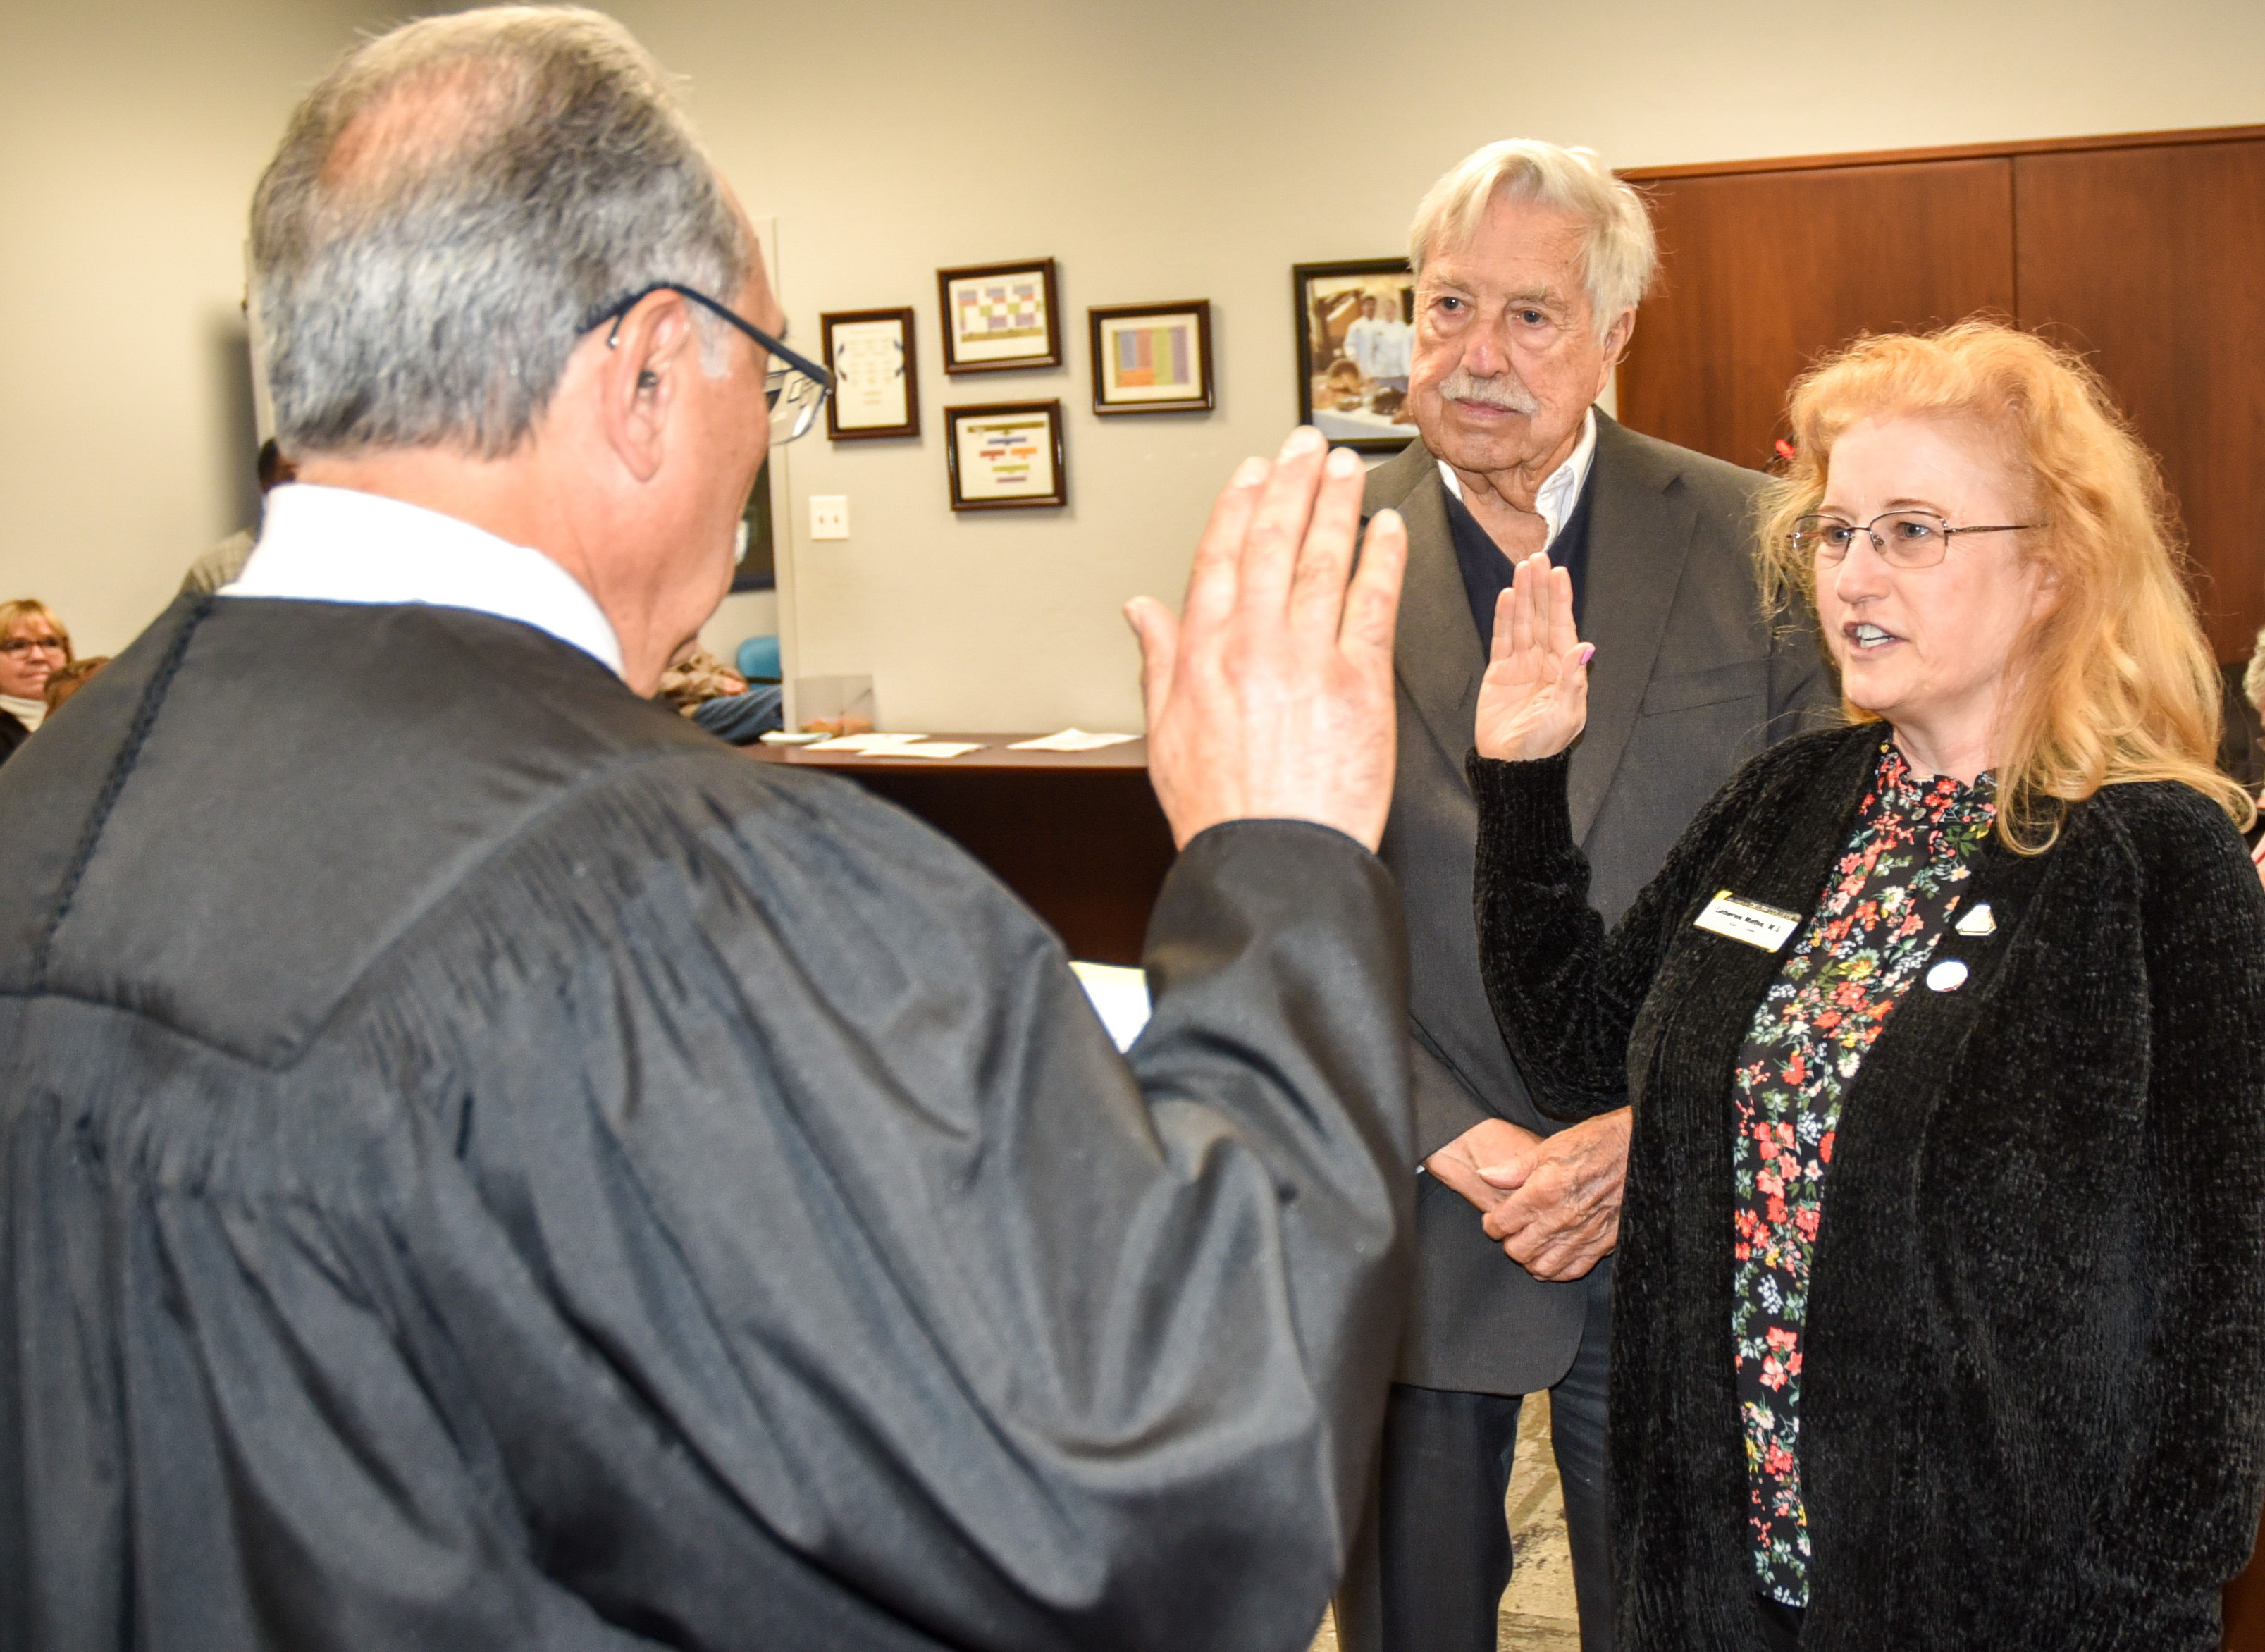 Returning San Joaquin Delta College Trustee Catherine Mathis is sworn in while her husband, Millard Frohock, watches.